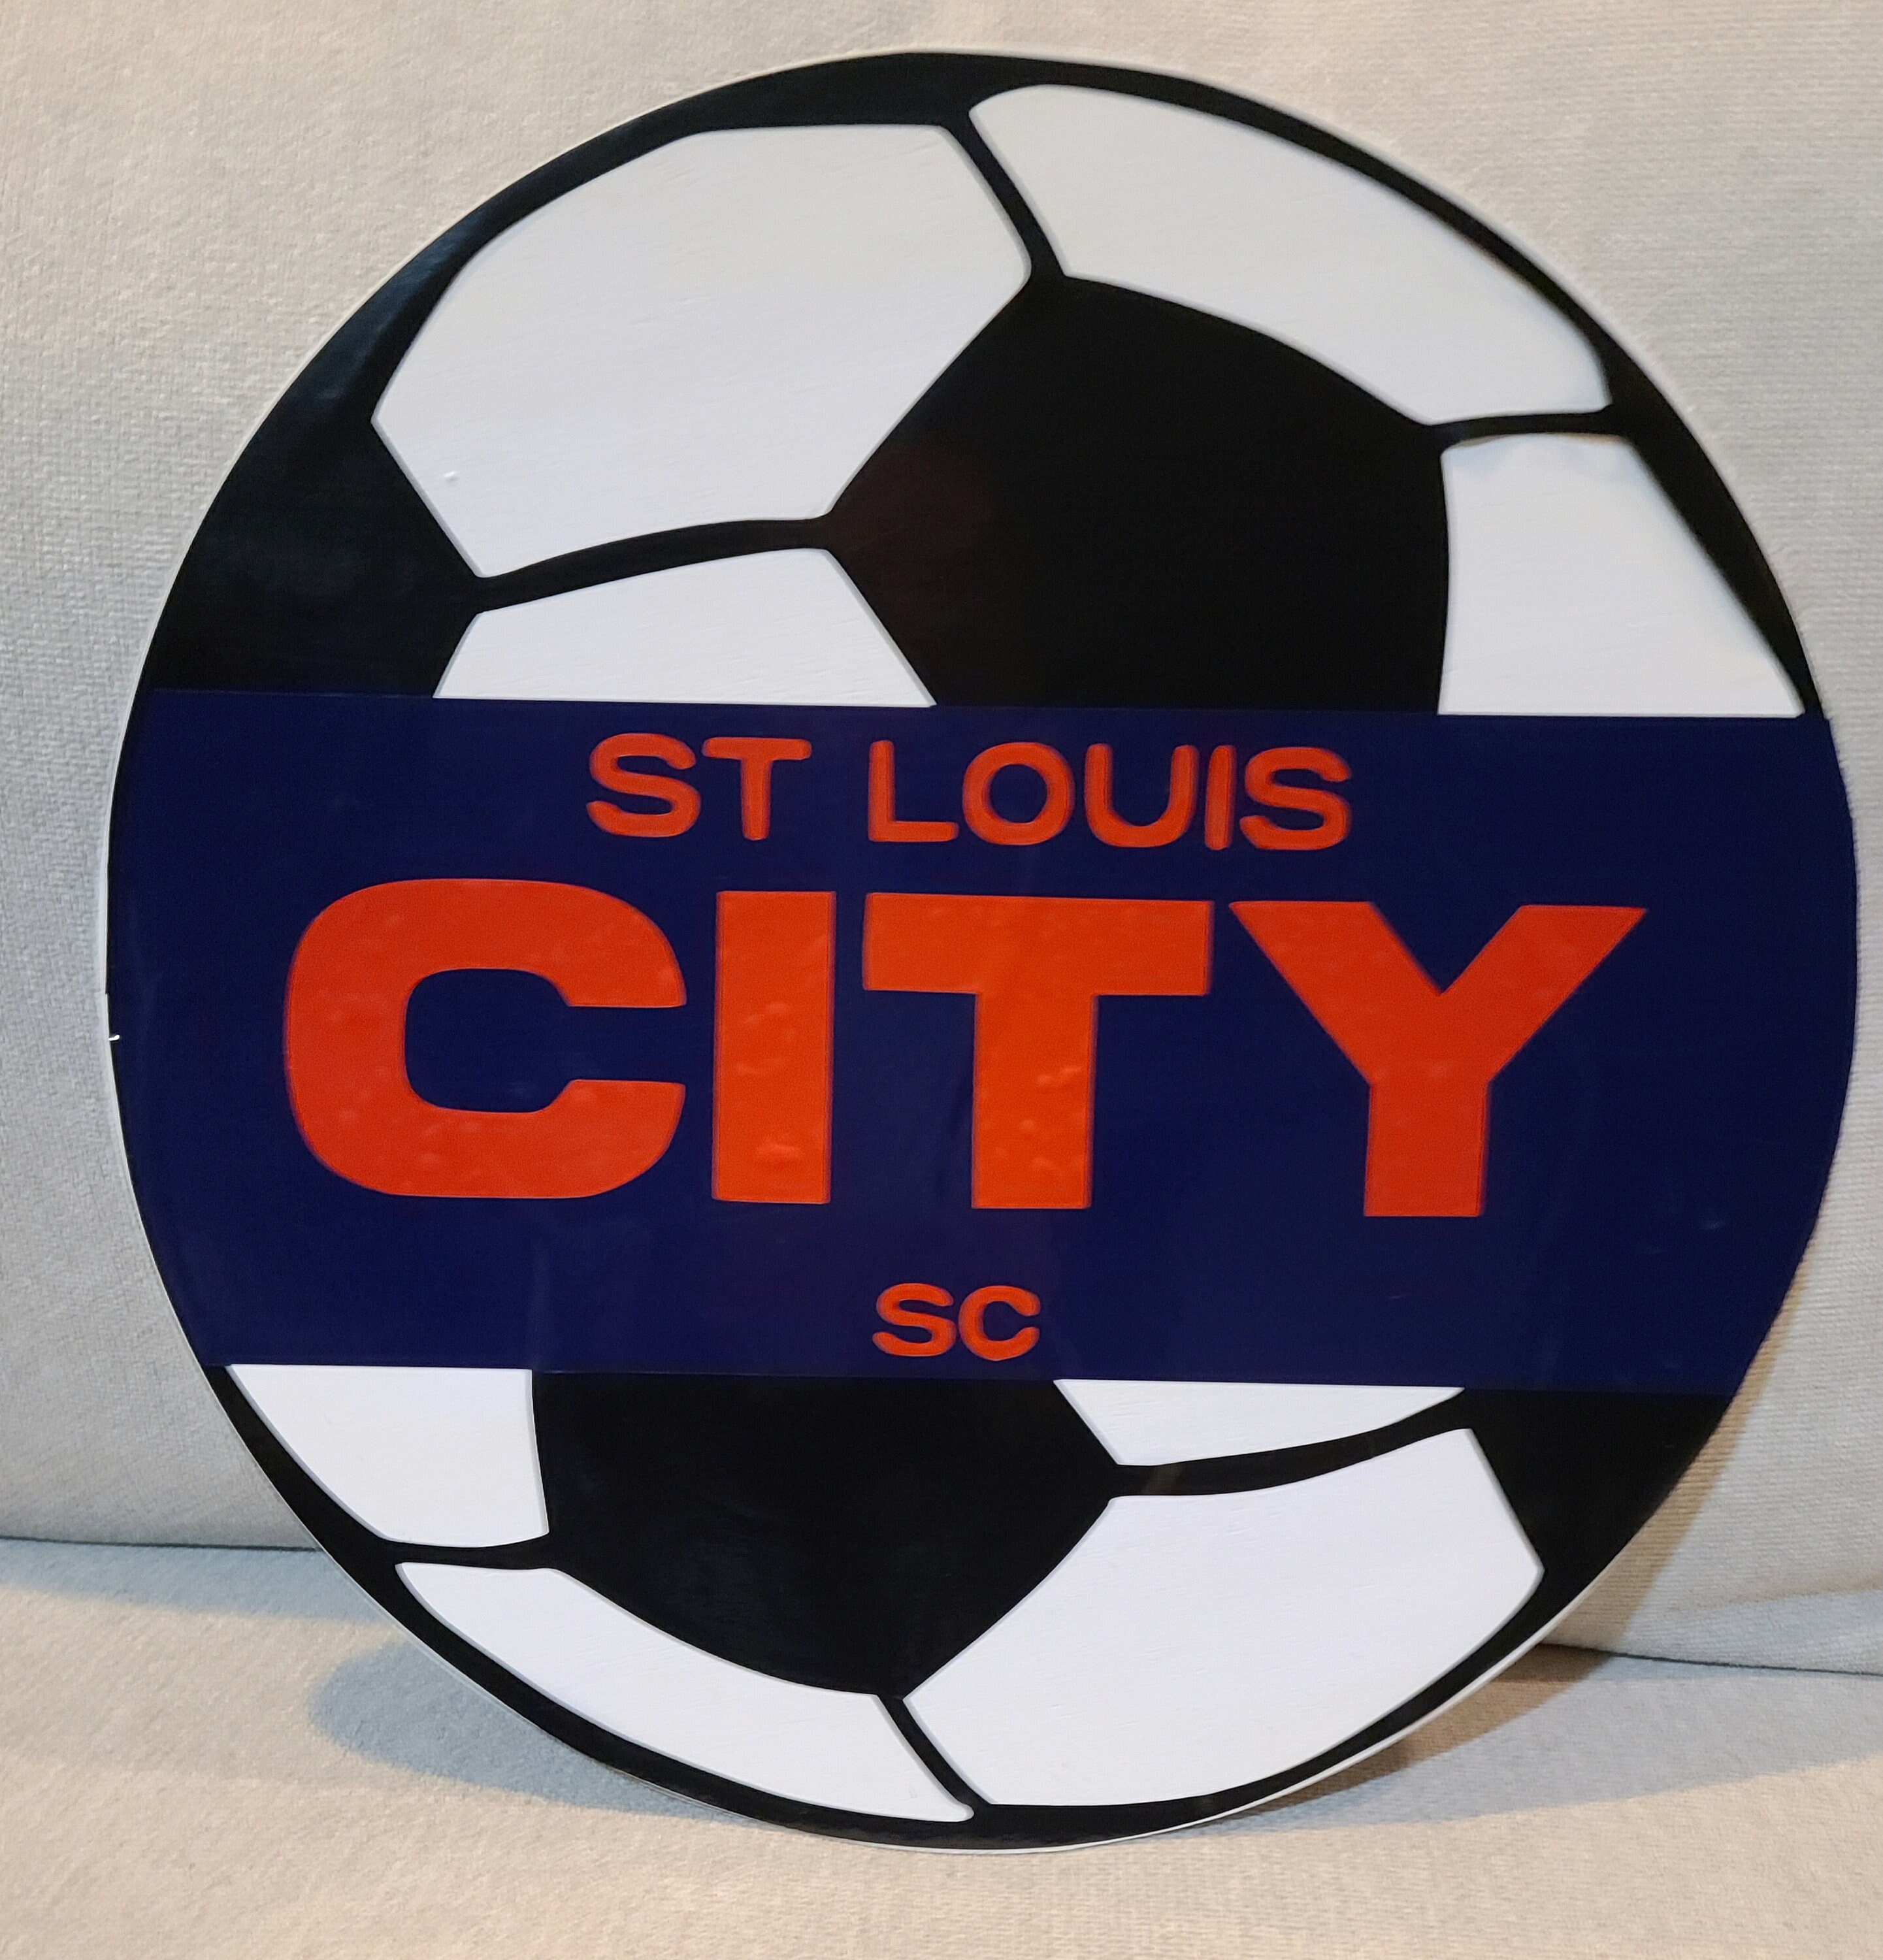 St Louis CITY SC CIRCLE SOCCER BALL | Cap